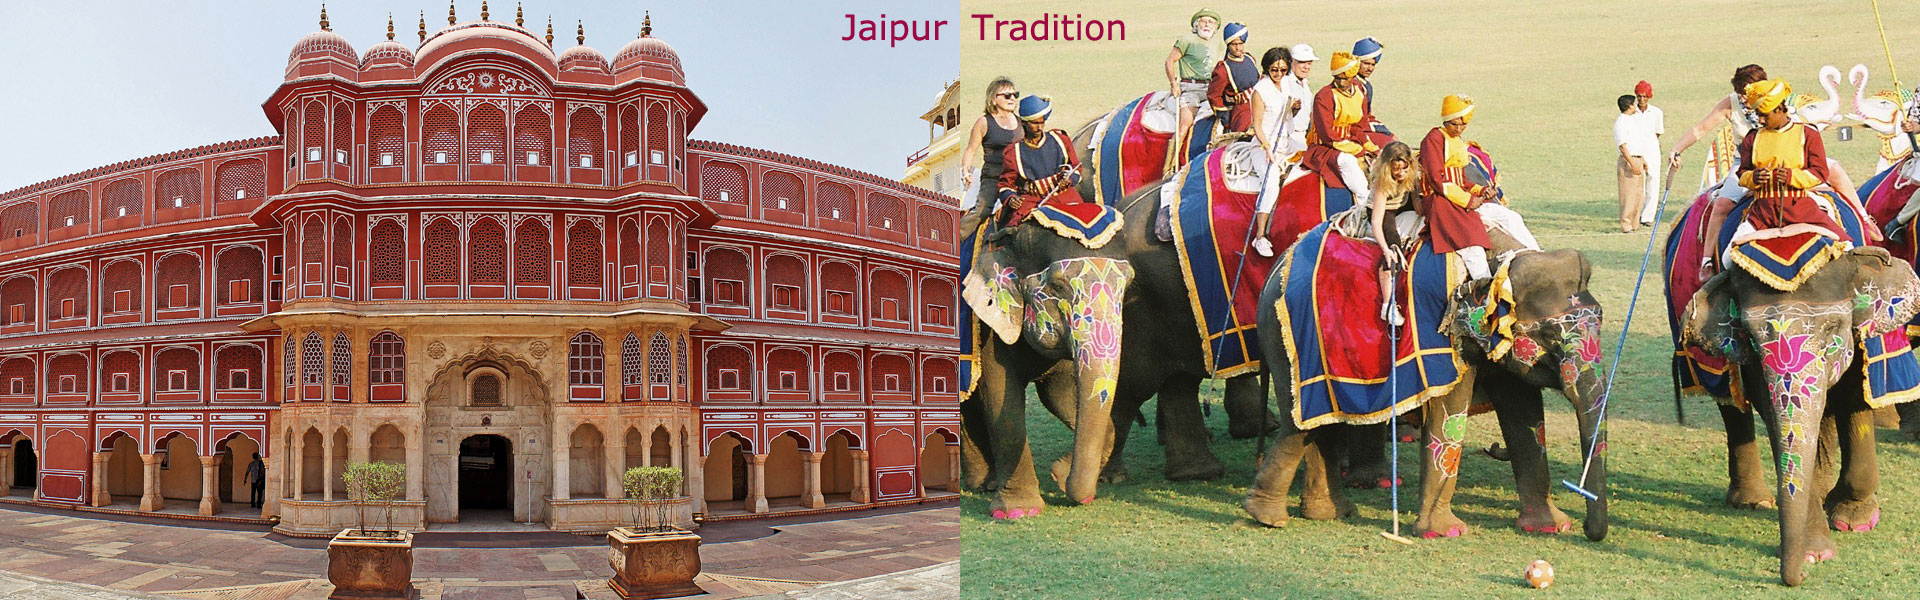 Jaipur Tradition